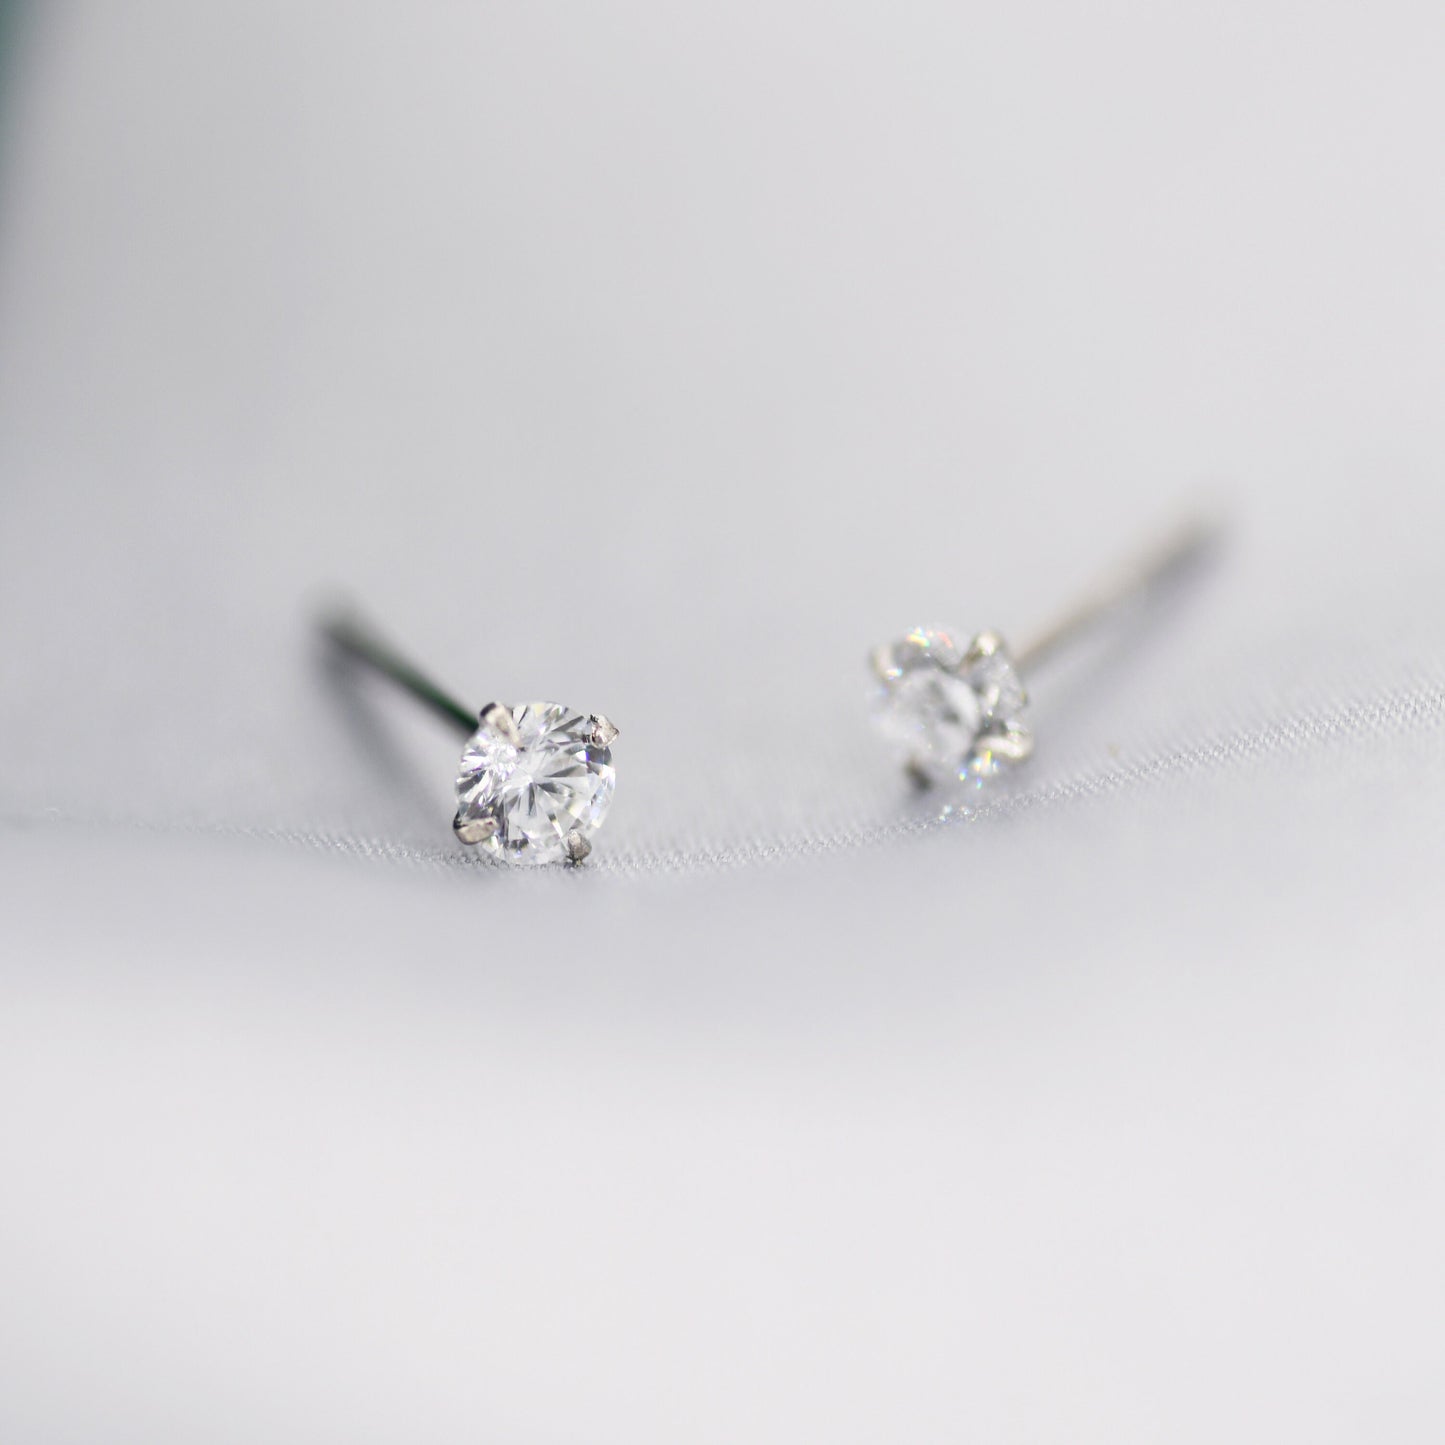 April Birthstone, Diamond Stud Earrings in Sterling Silver, Extra Tiny Crystal Stud, 3mm Birthstone CZ Earrings